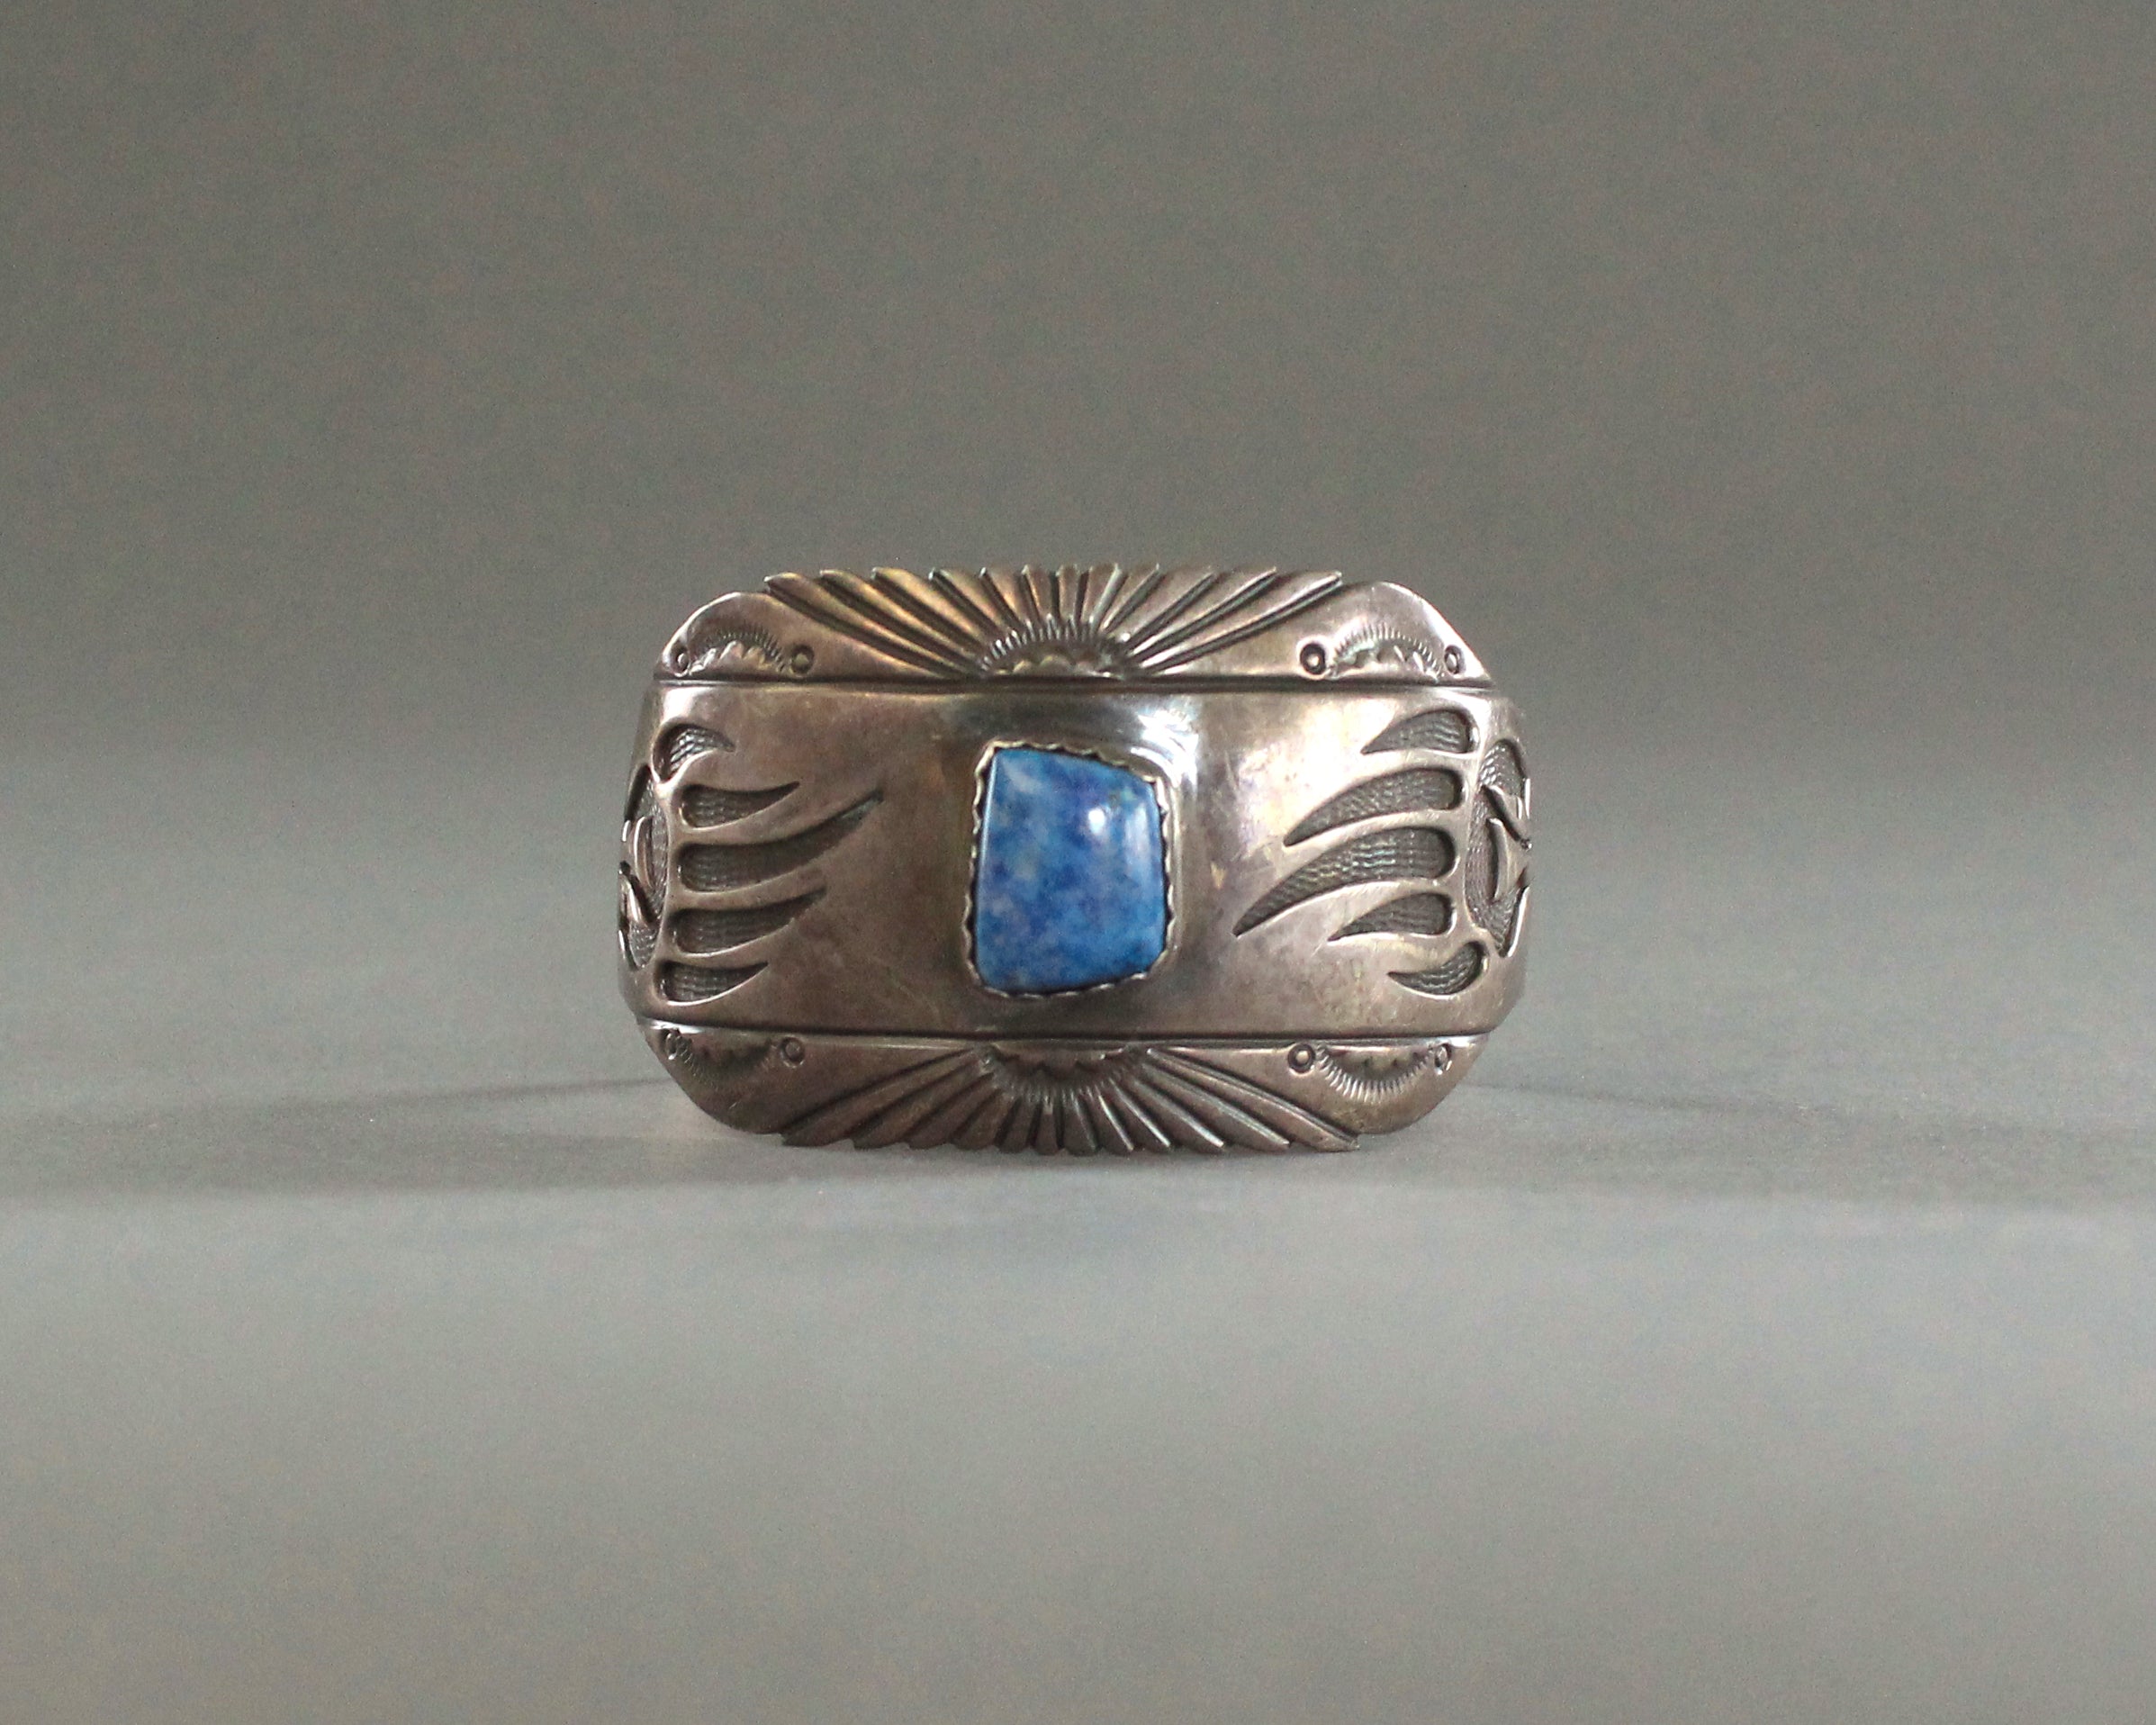 Navajo bear paw bracelet with blue lapis lazuli stone